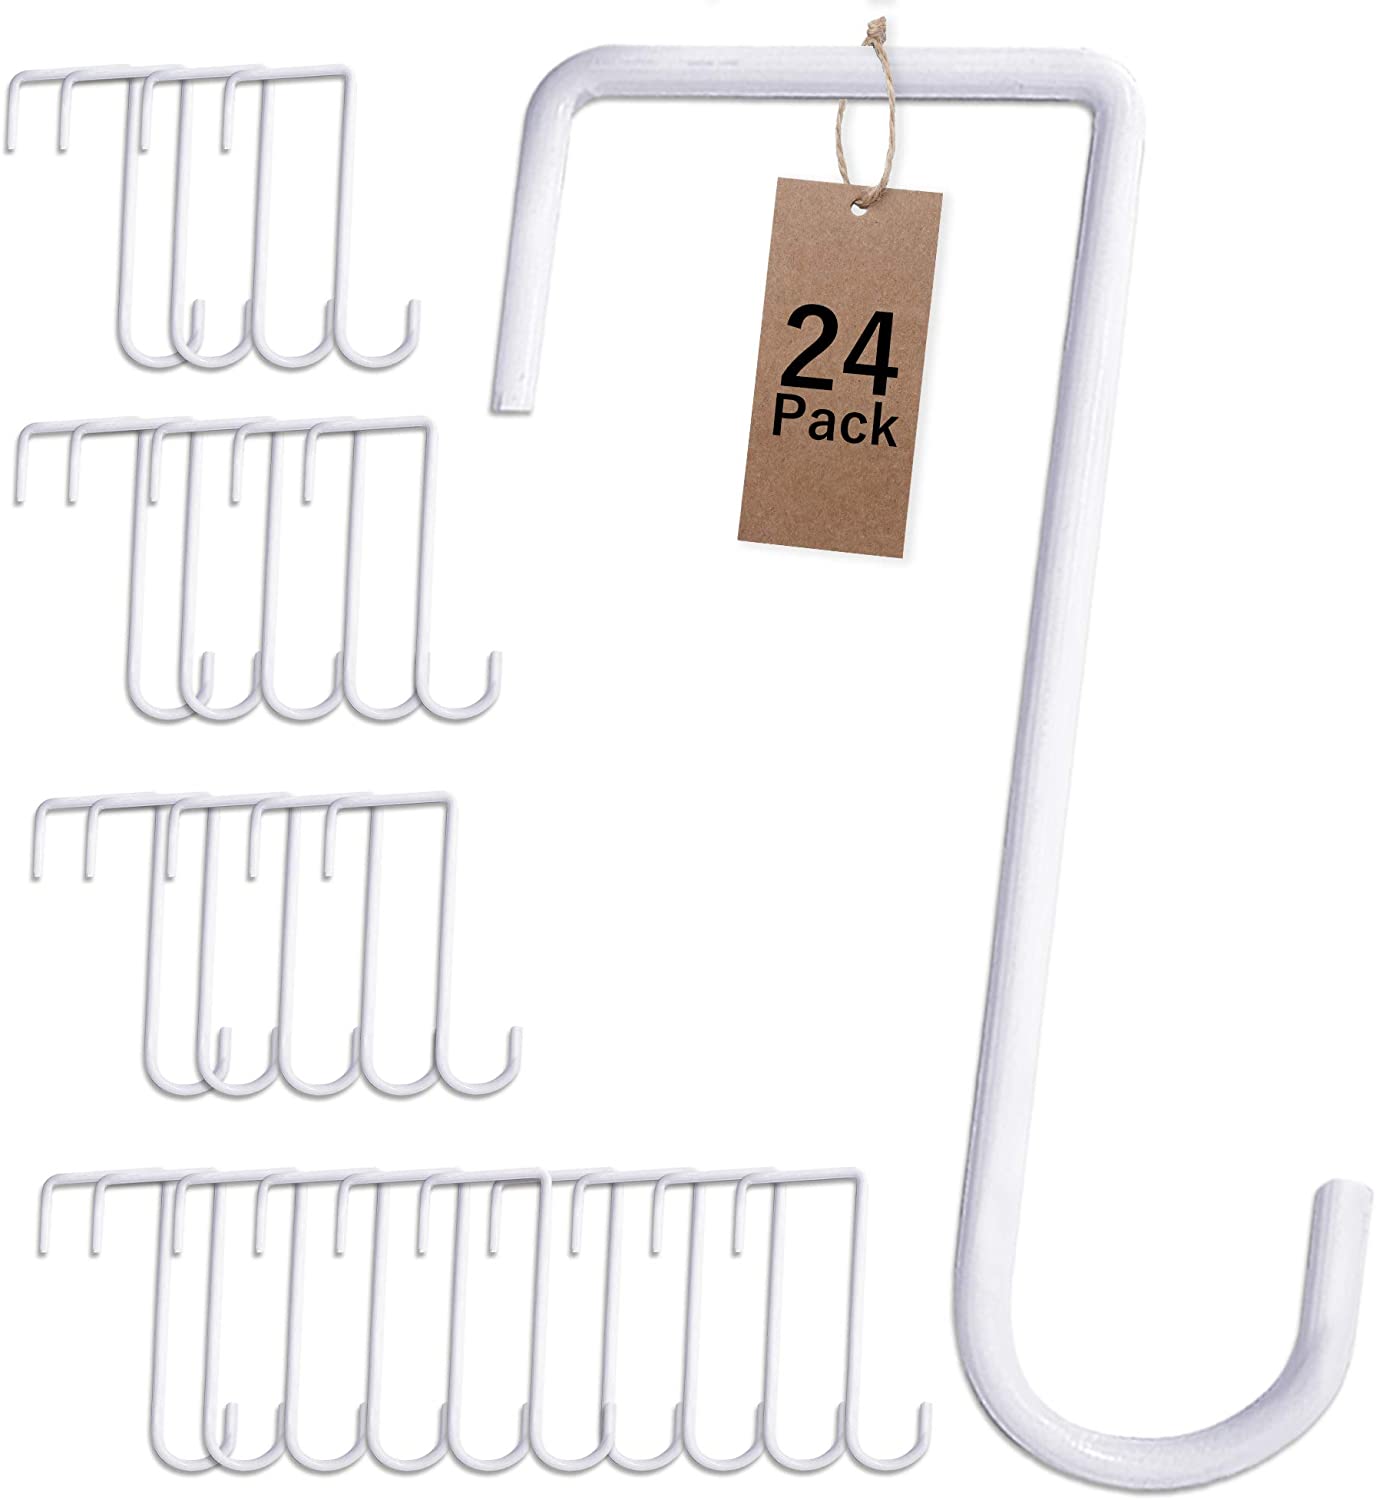 JOYSEUS 24pcs Vinyl Fence Hooks, 2 x 6 Inches Patio Hooks, White Powder Coated Steel Fence Hooks Hangers for Hanging Plants, Lights, Pool Equipment